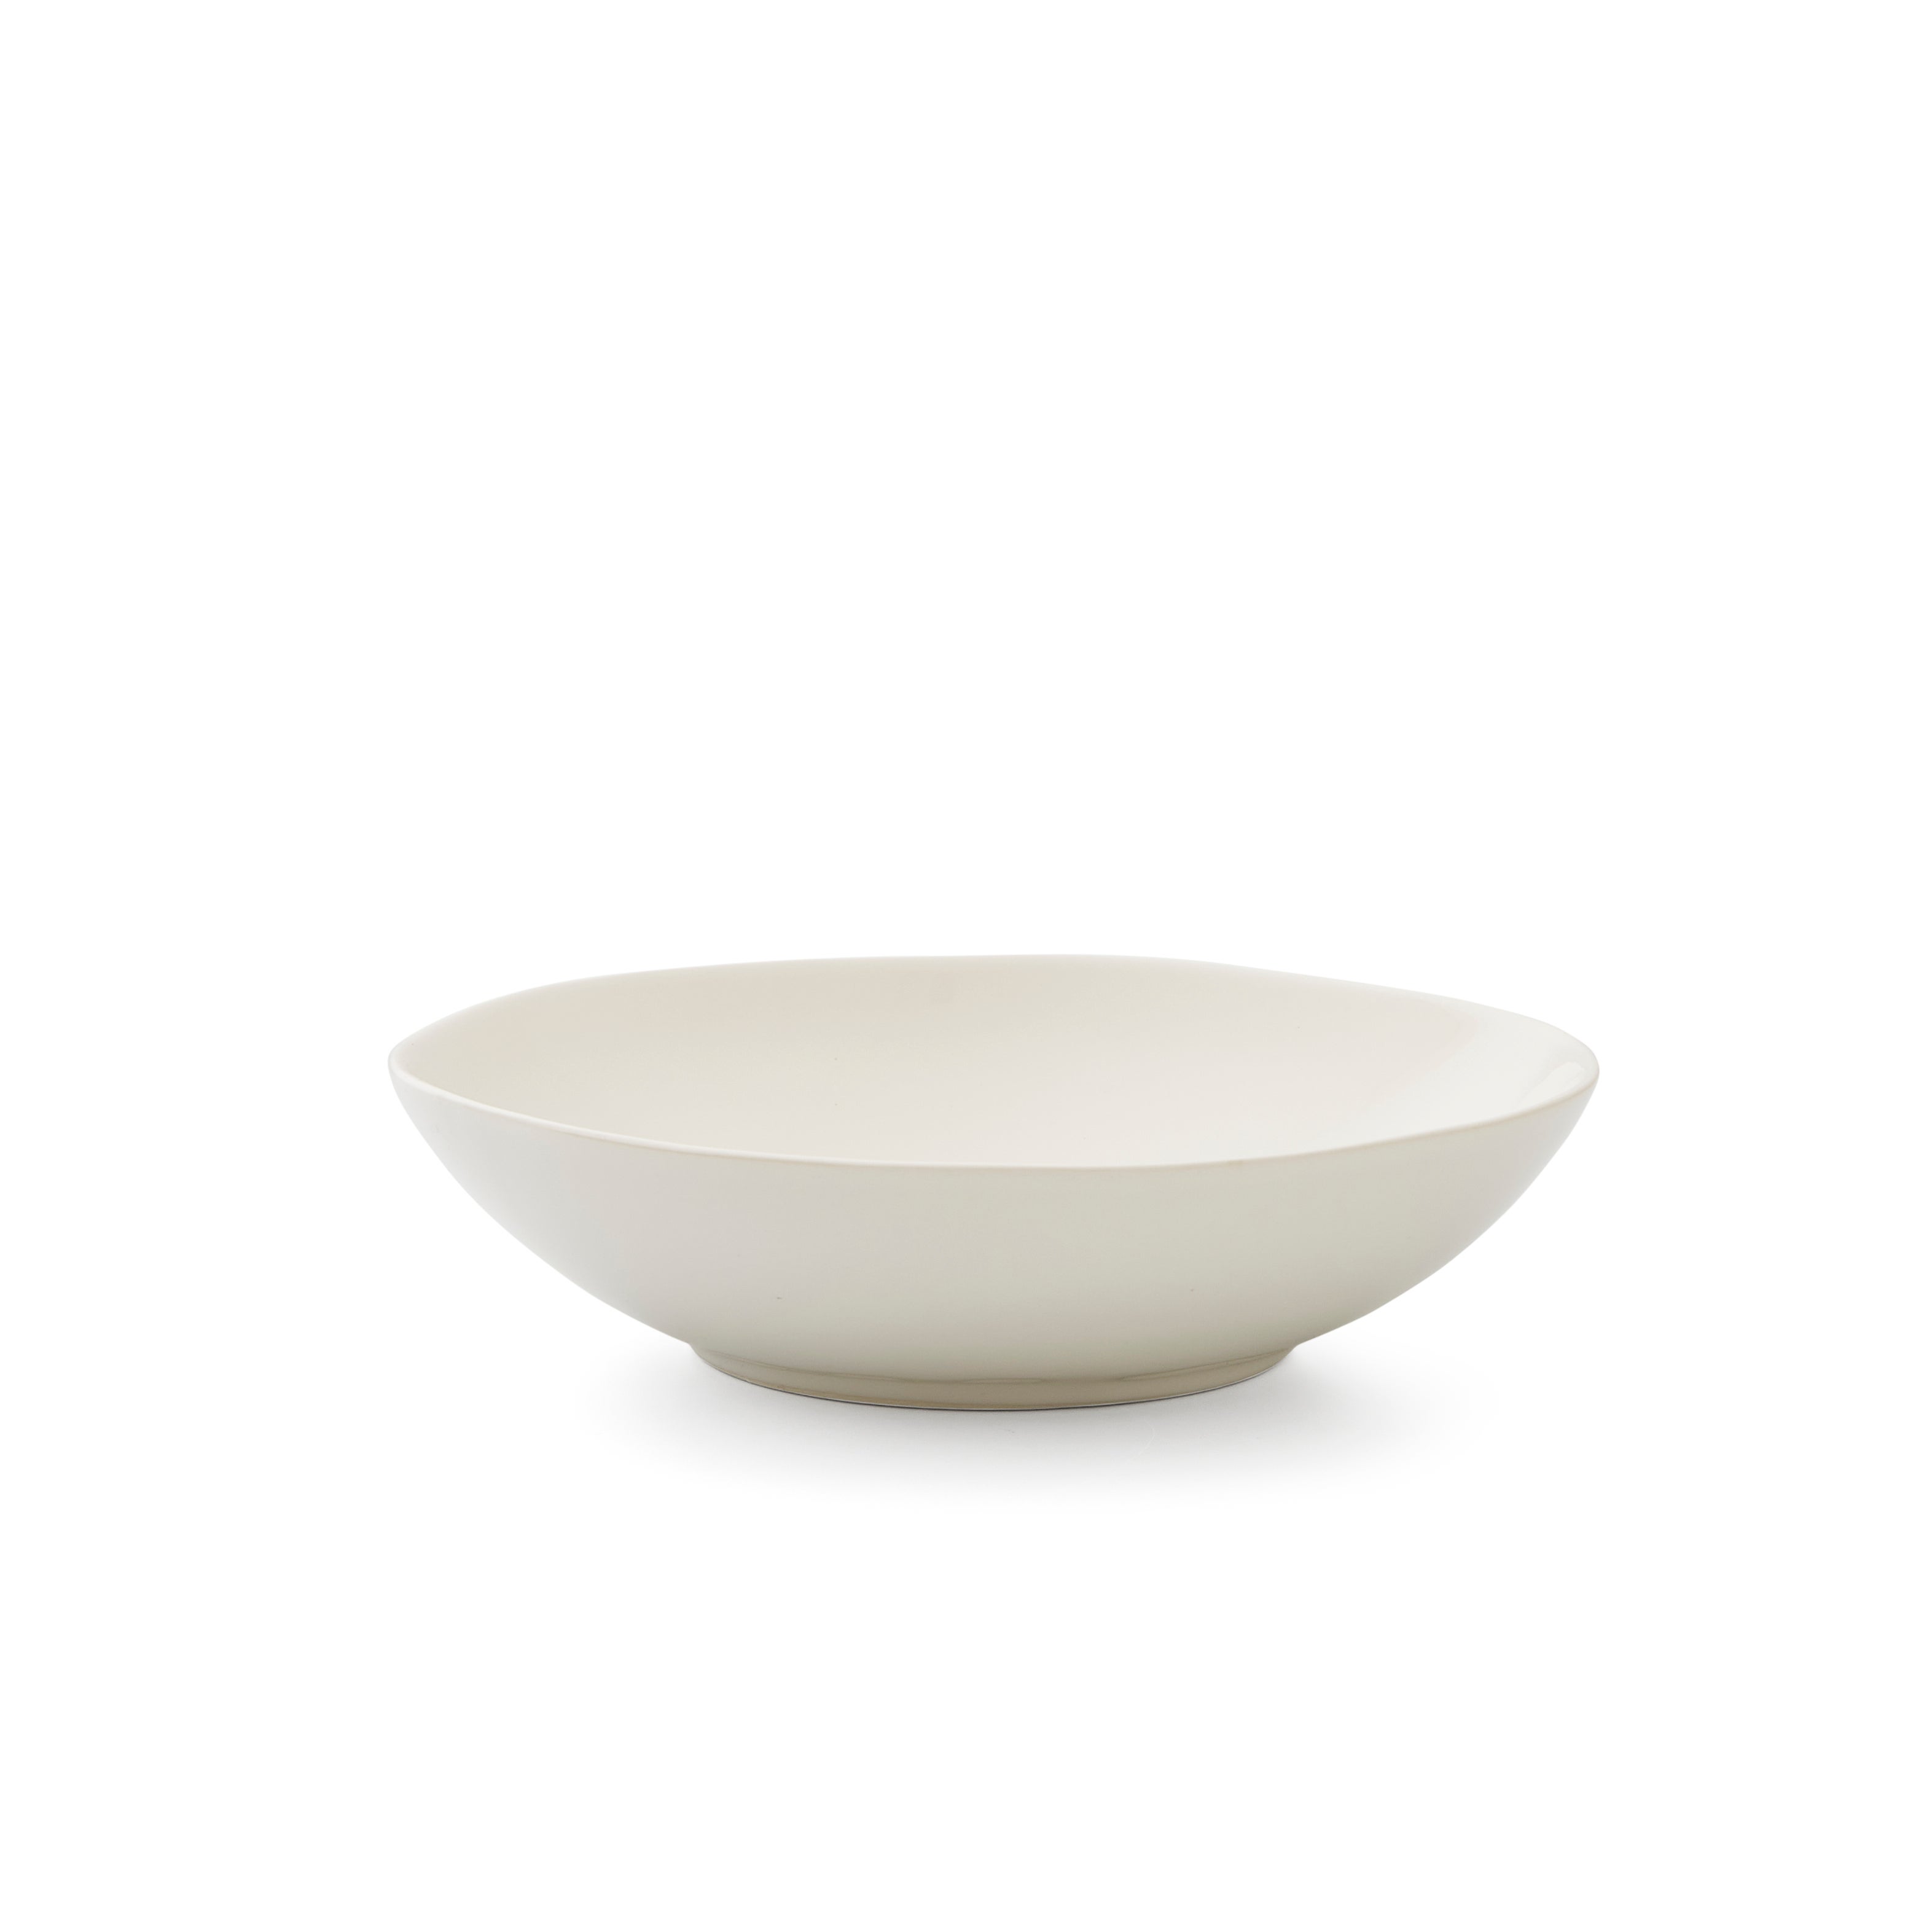 Photos - Salad Bowl / Serving Platter Sophie Conran for Portmeirion Set of 4 Pasta Bowls White